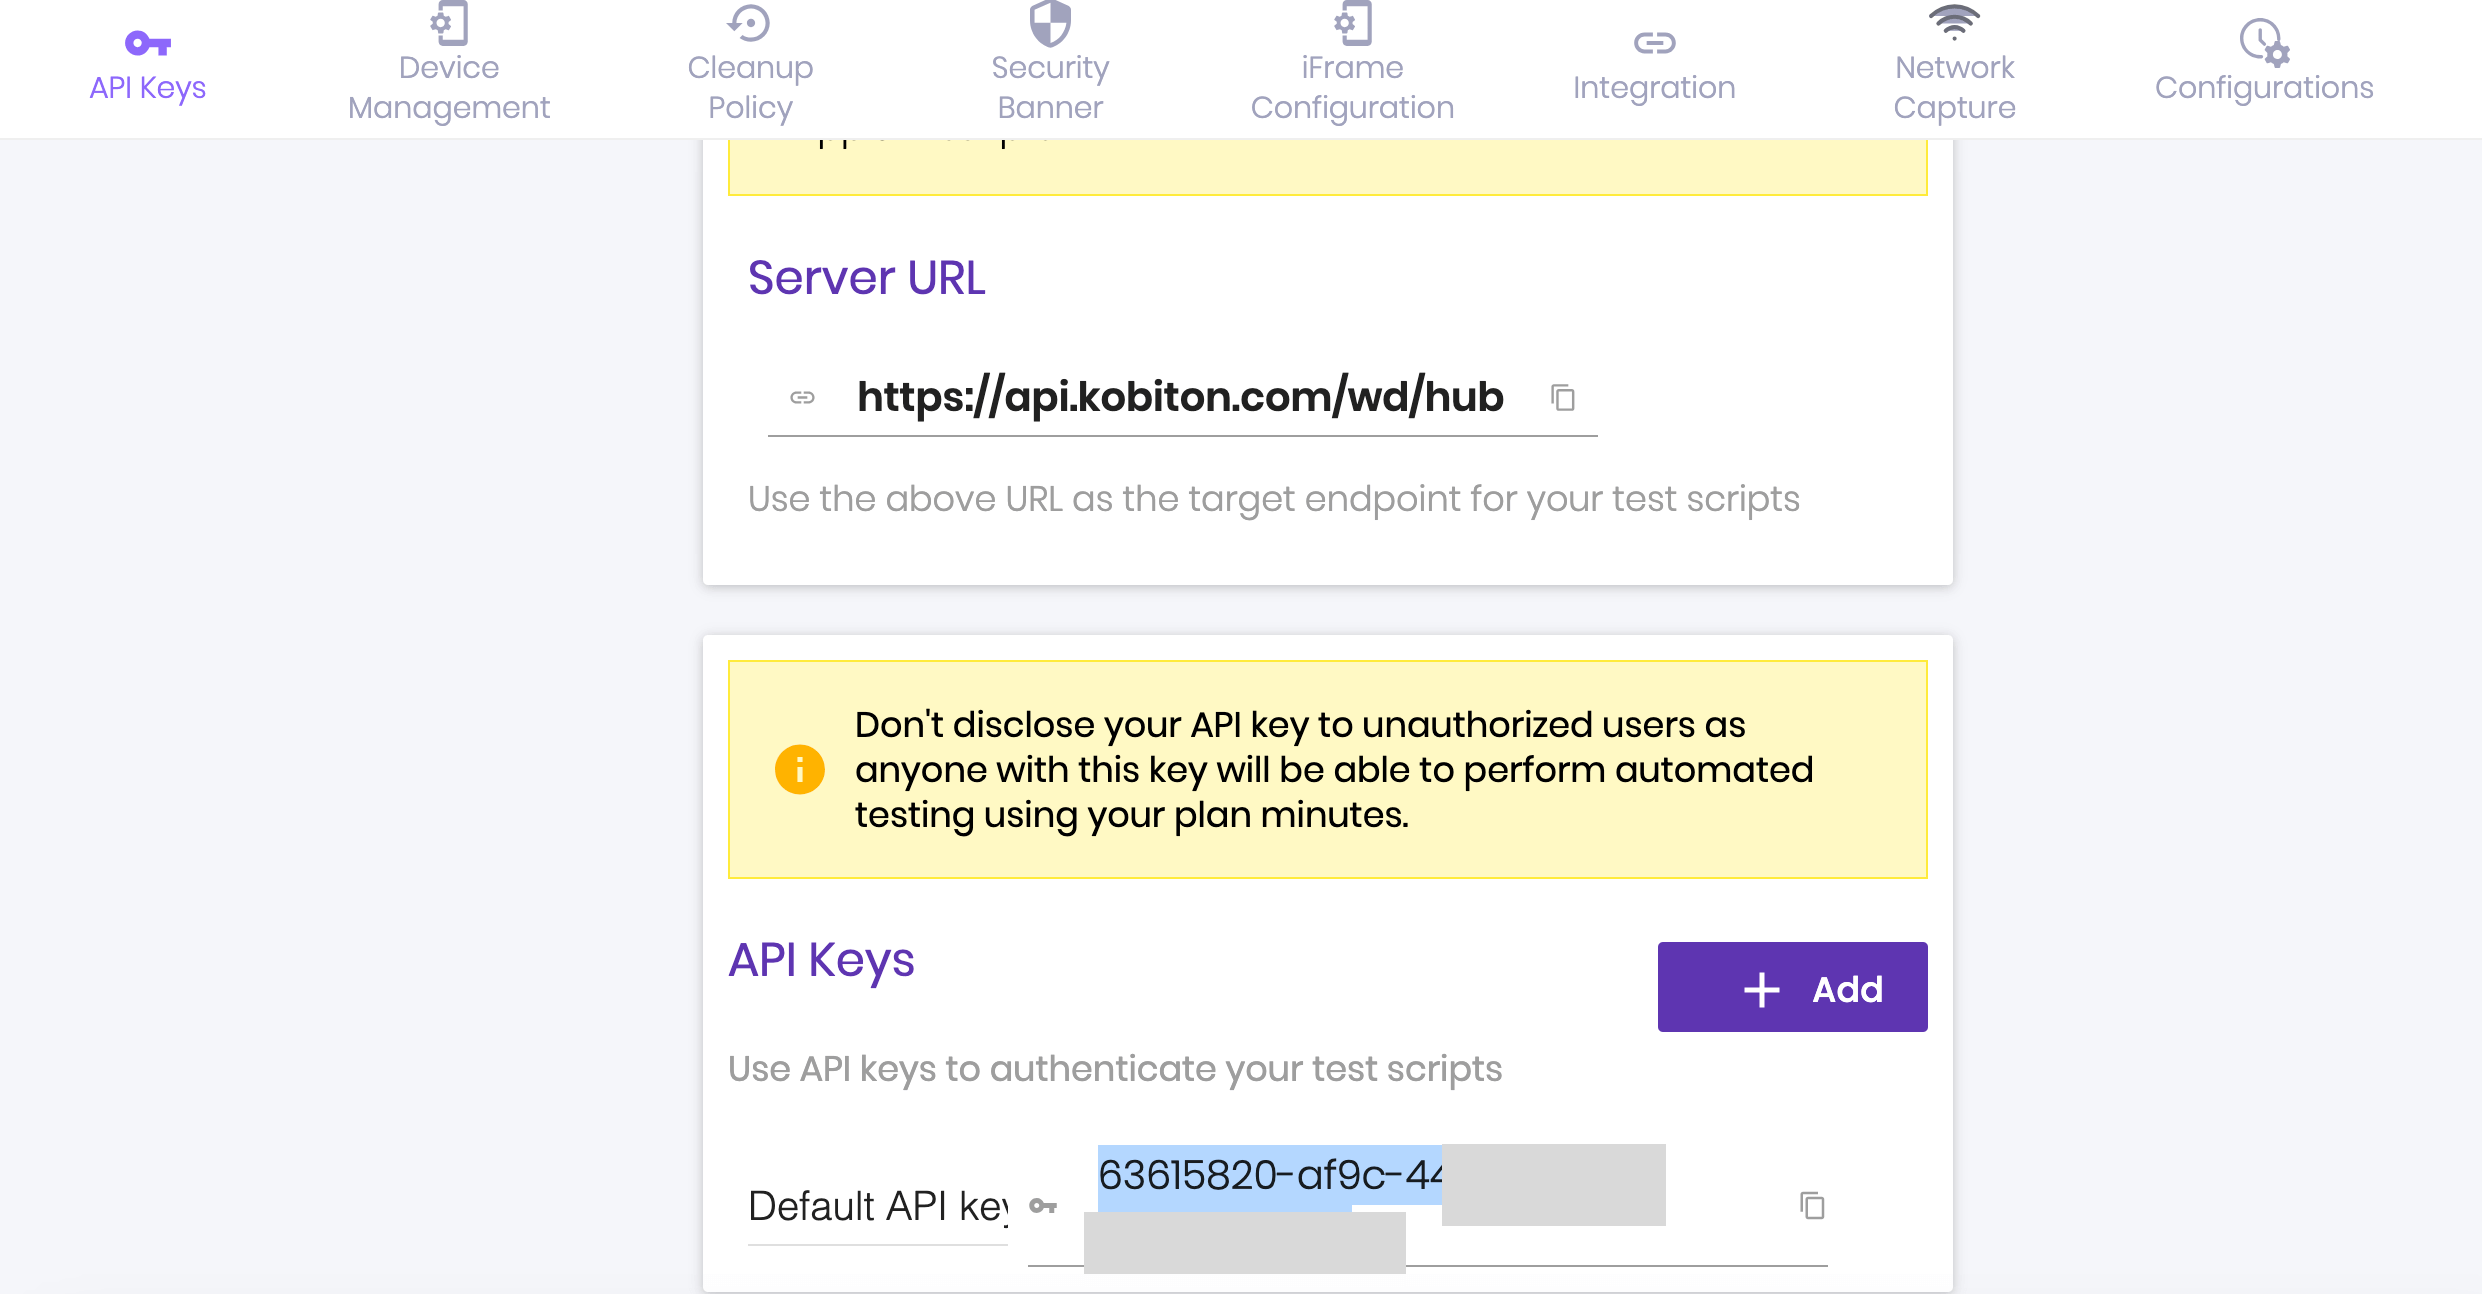 Note down the API Key